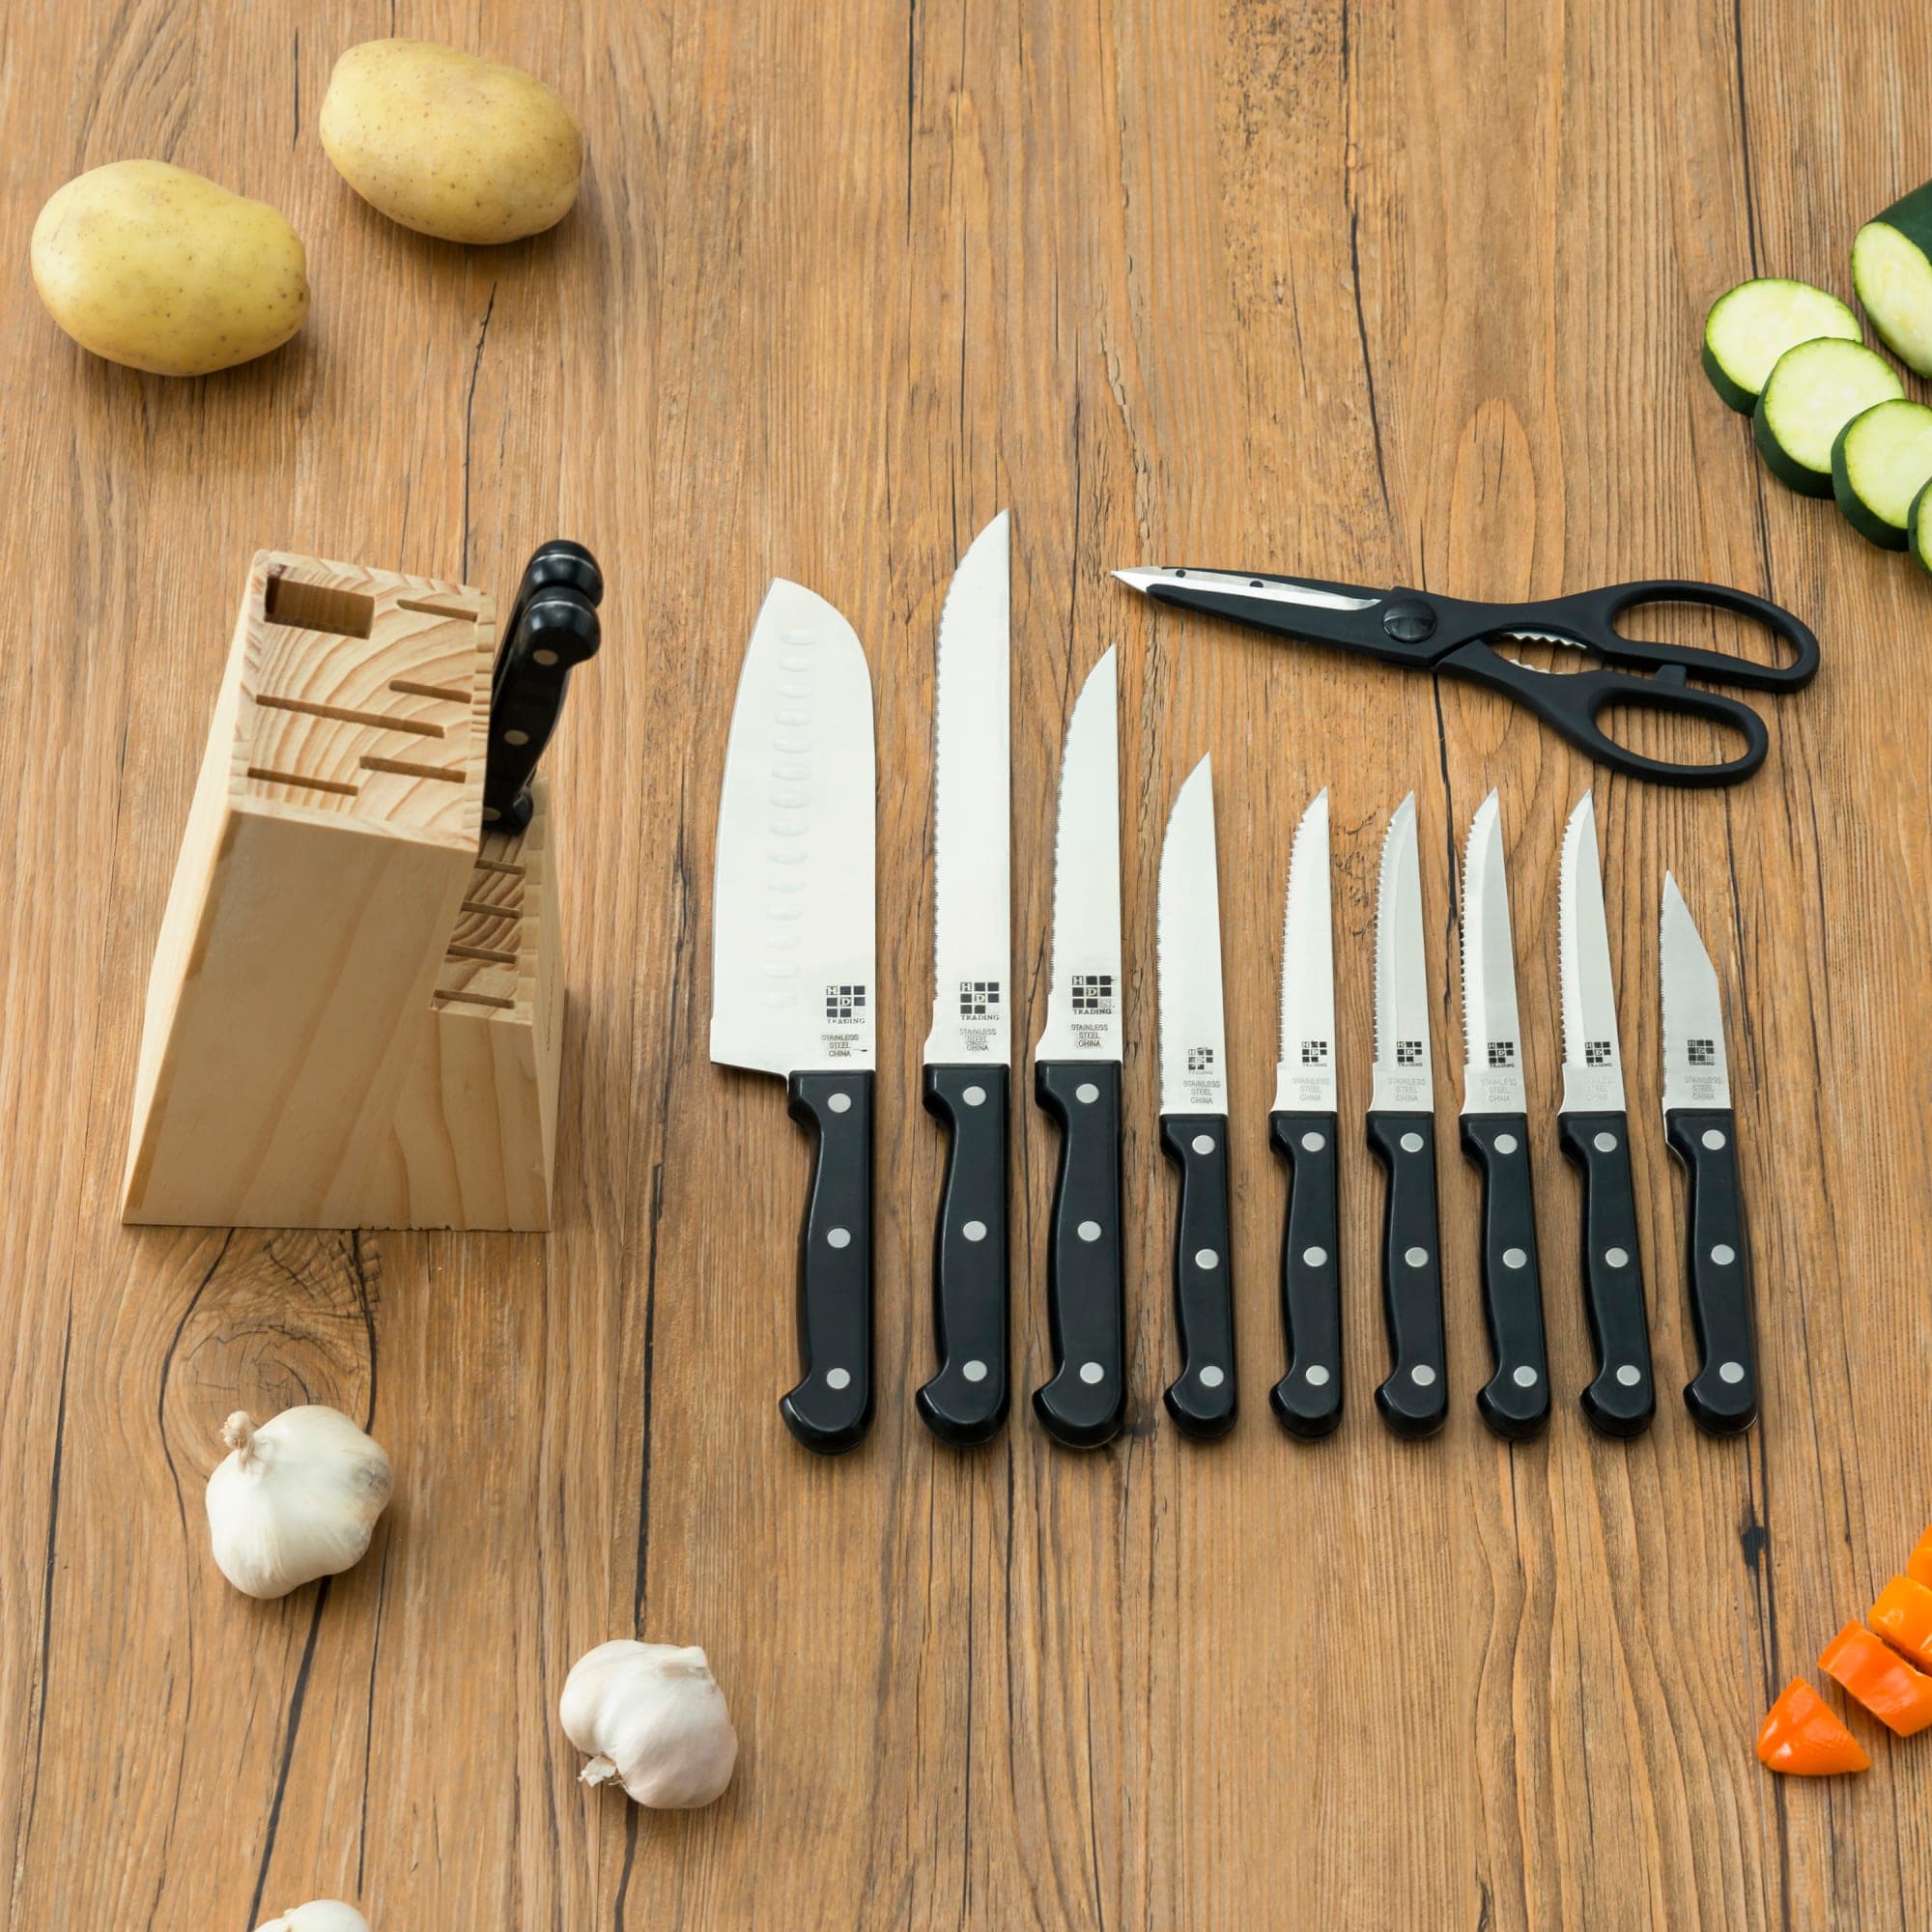 Chicago Cutlery Essentials 15-Piece Kitchen Knife Set with Wood